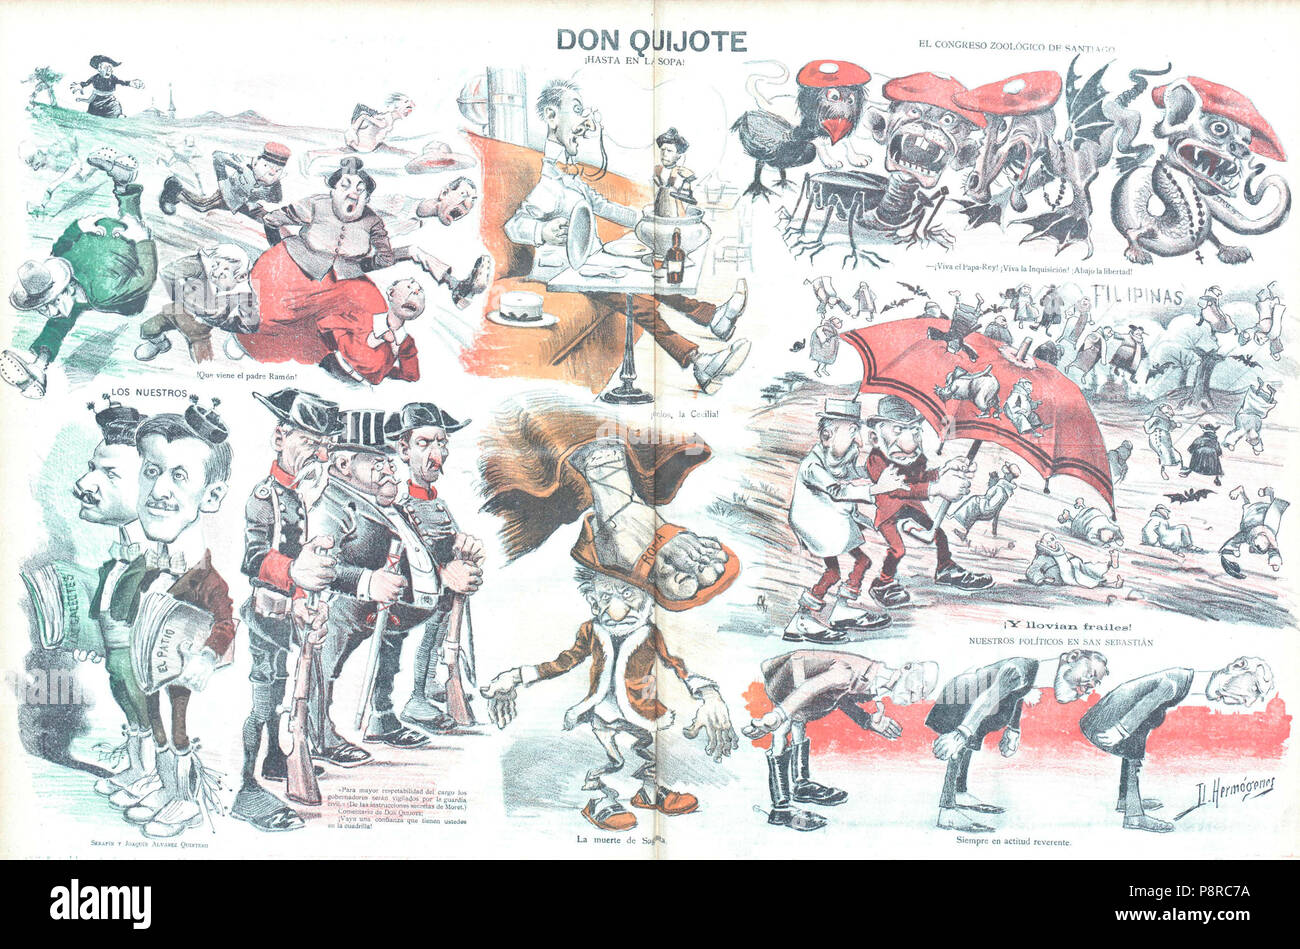 . 260 Don Quijote, 25 de Julio de 1902 Stockfoto